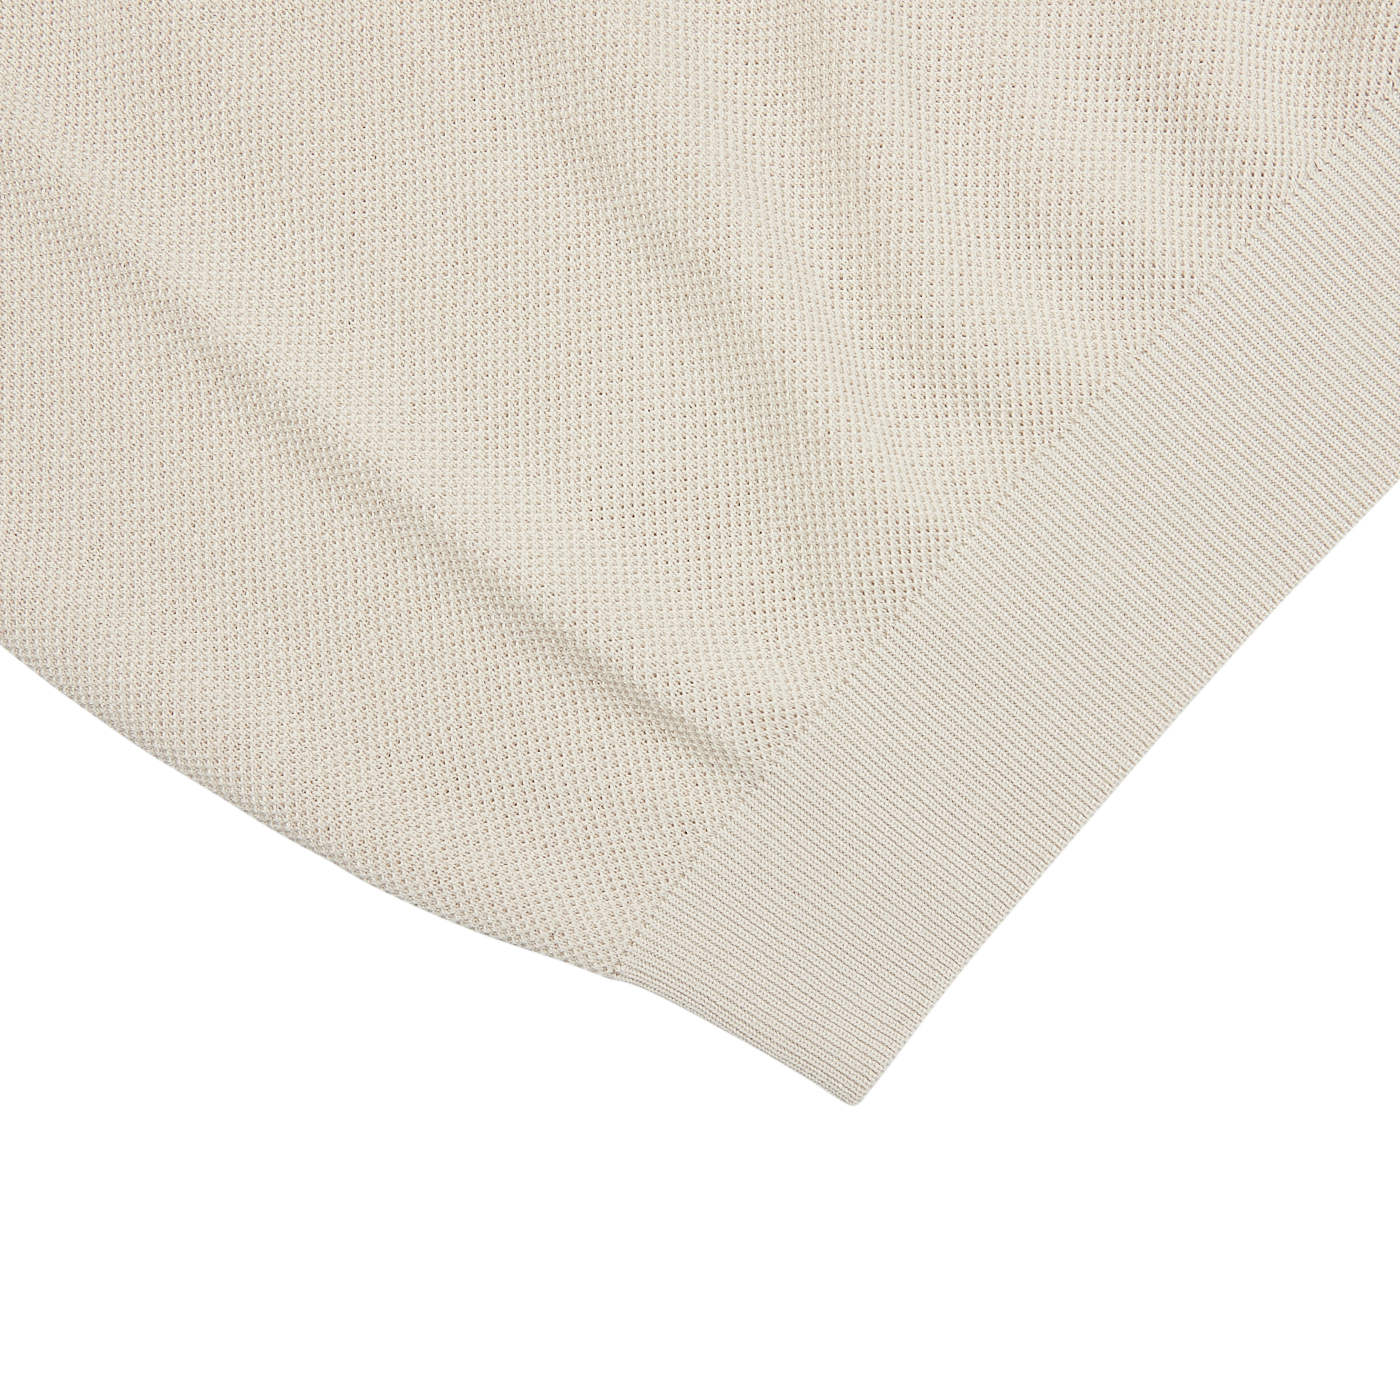 A close up of a Mauro Ottaviani Cream Beige Cotton Silk Polo Shirt on a white surface.